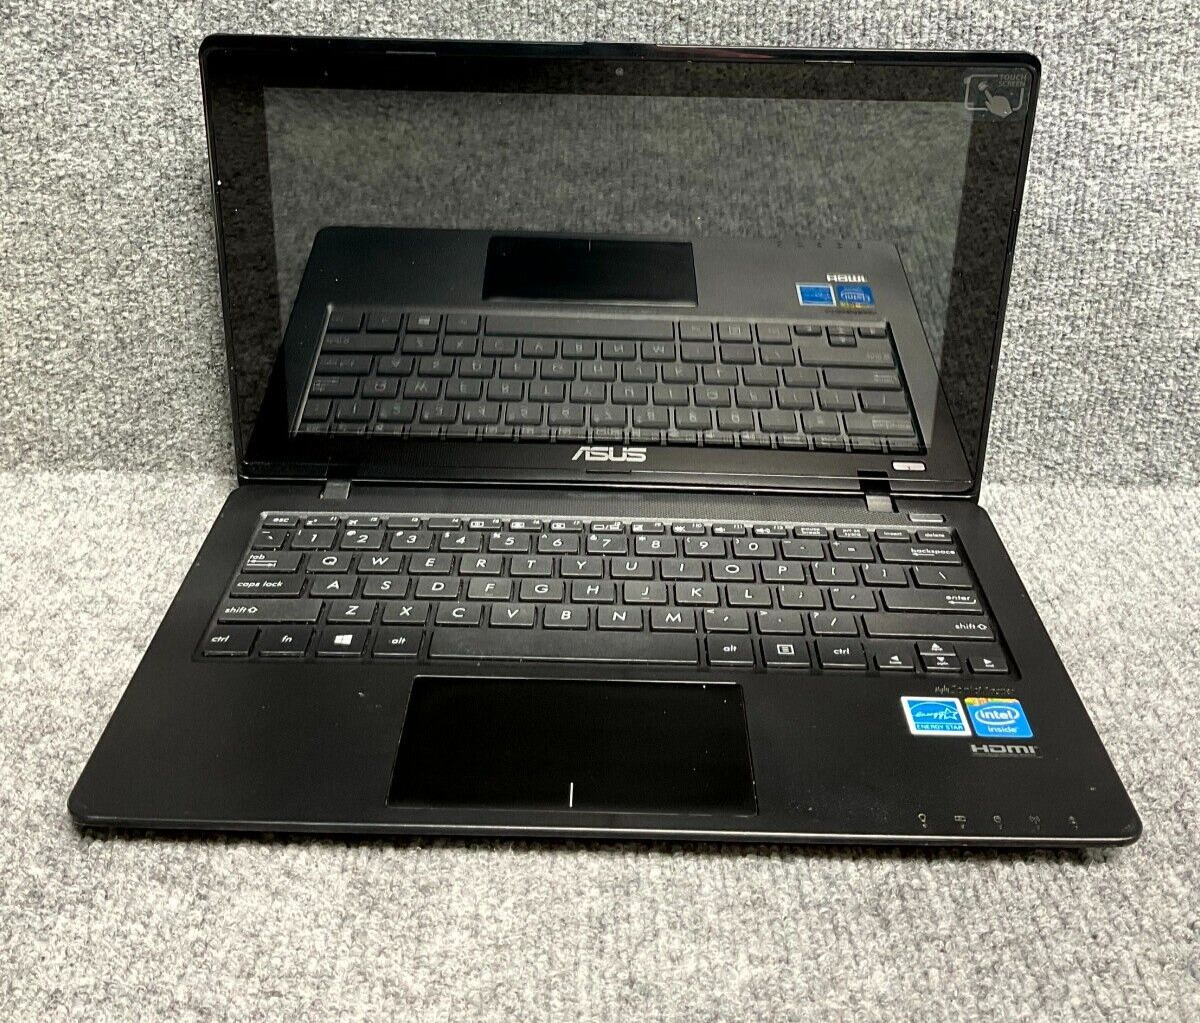 Asus X200M Touchscreen Intel inside Notebook PC